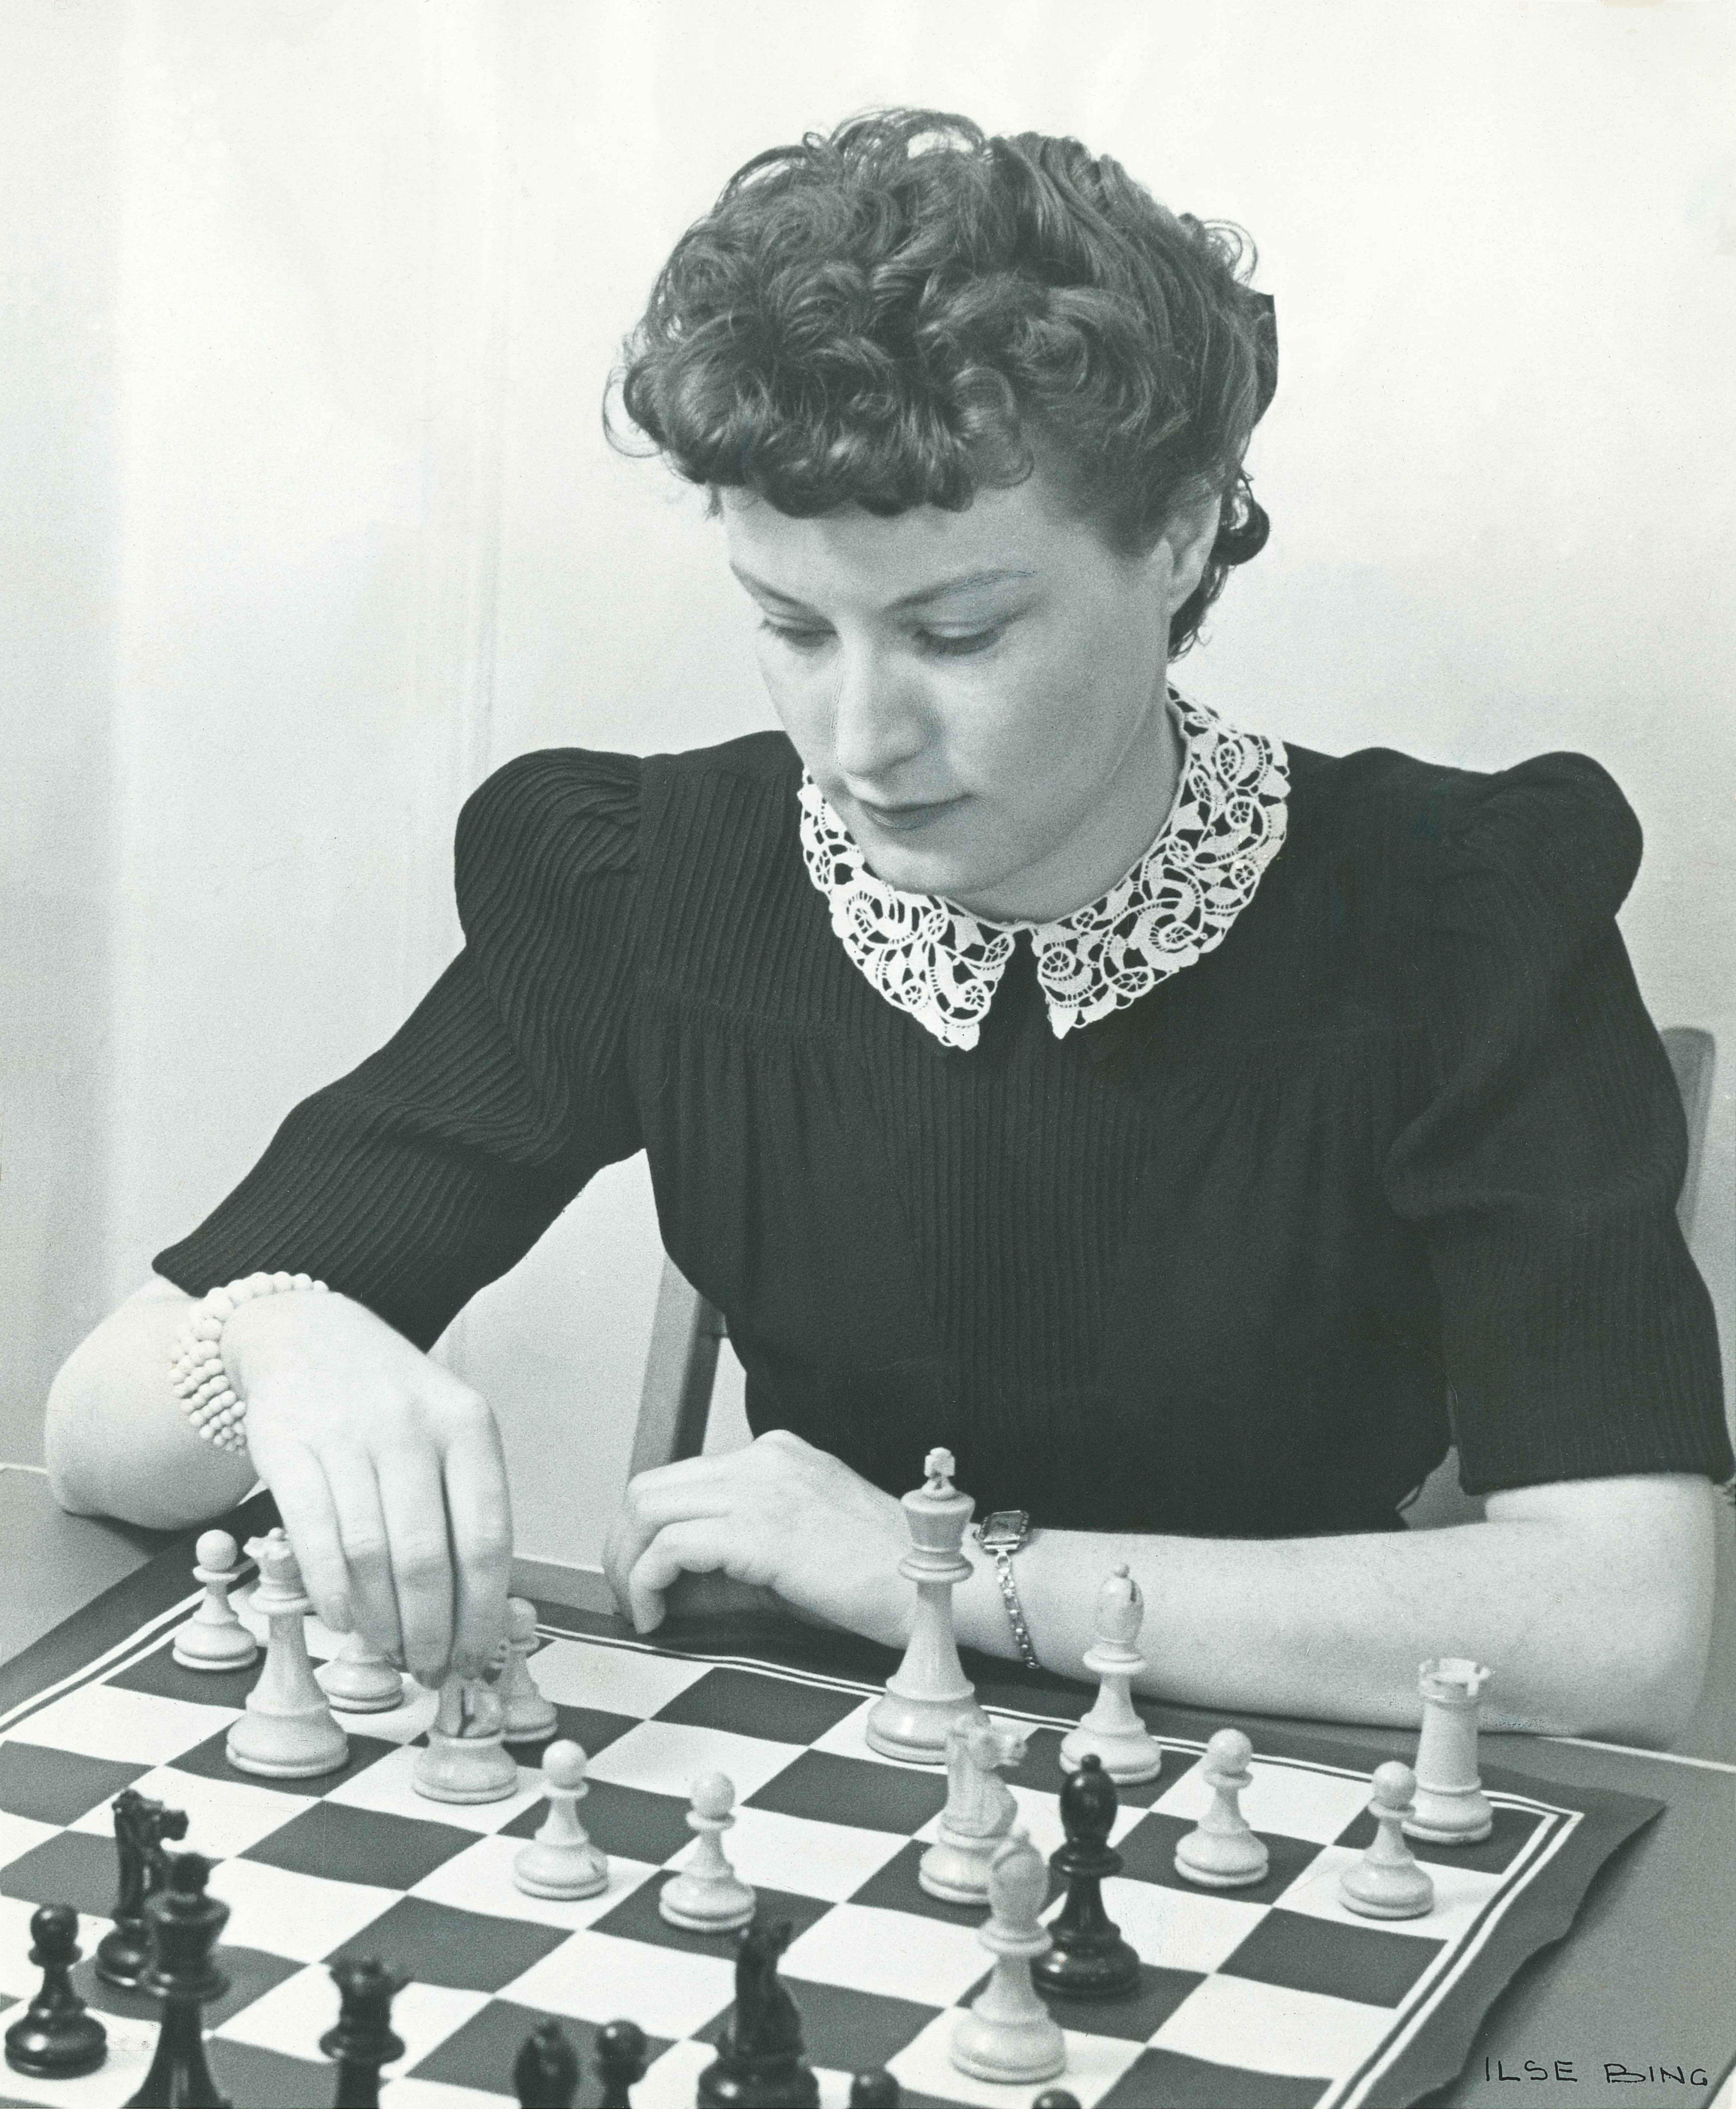 Лиза хартман шахматистка биография фото